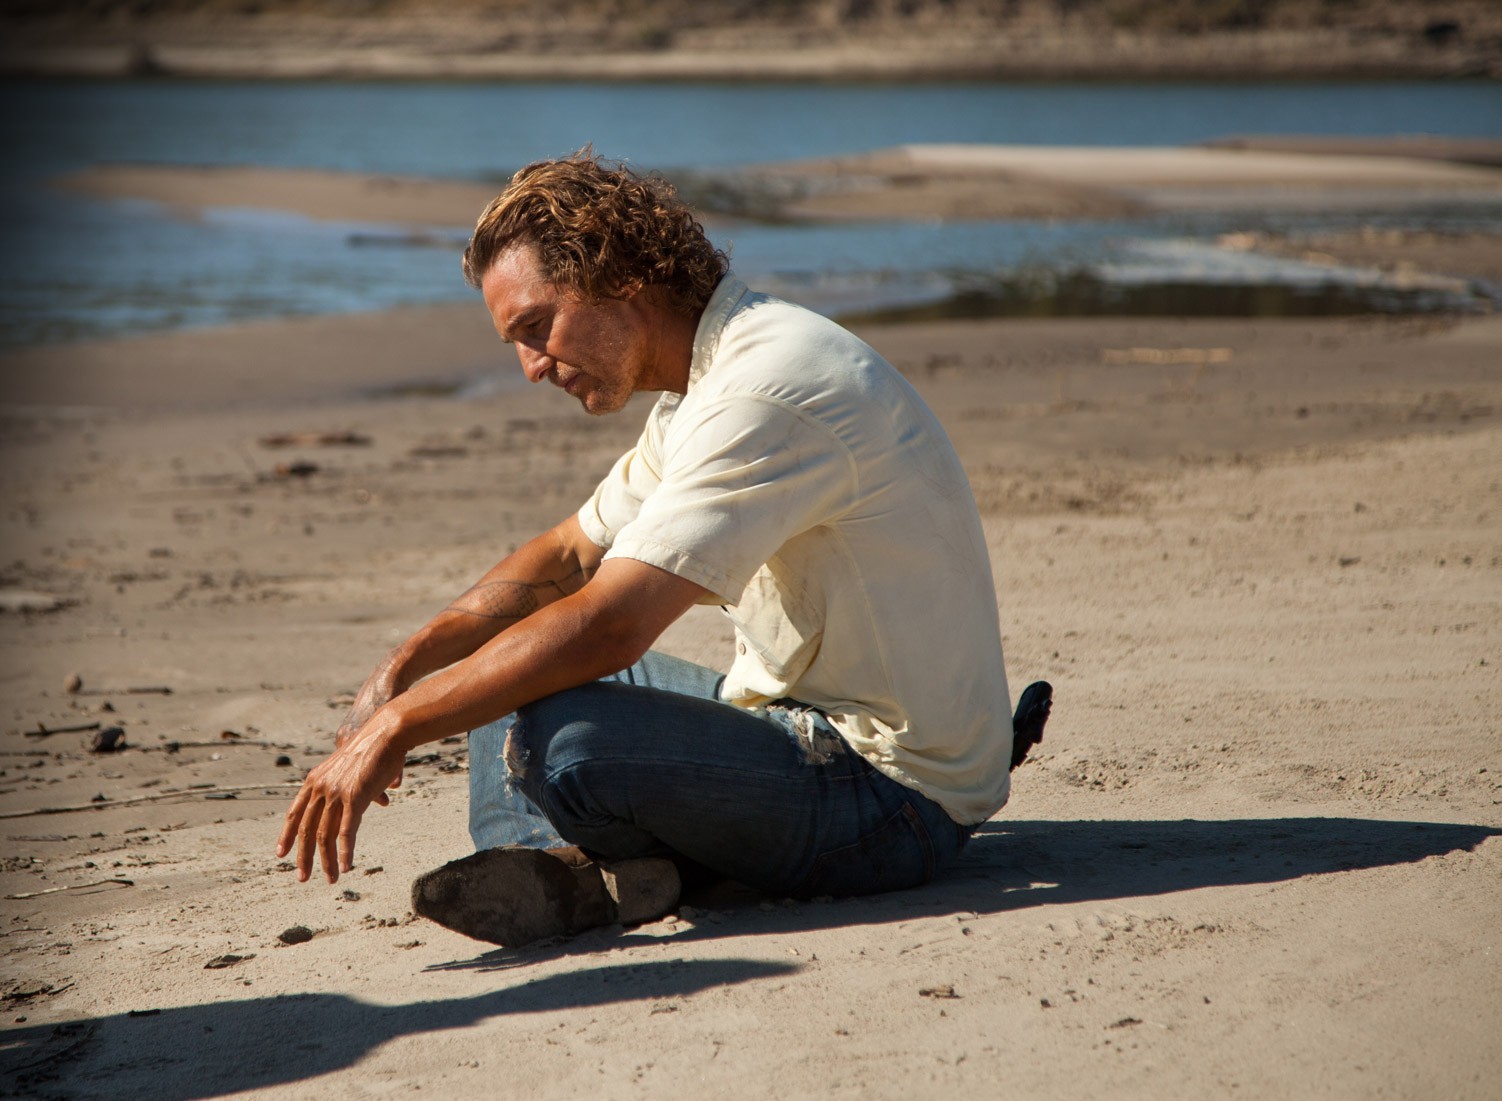 Matthew McConaughey stars as Mud in Roadside Attractions' Mud (2013)